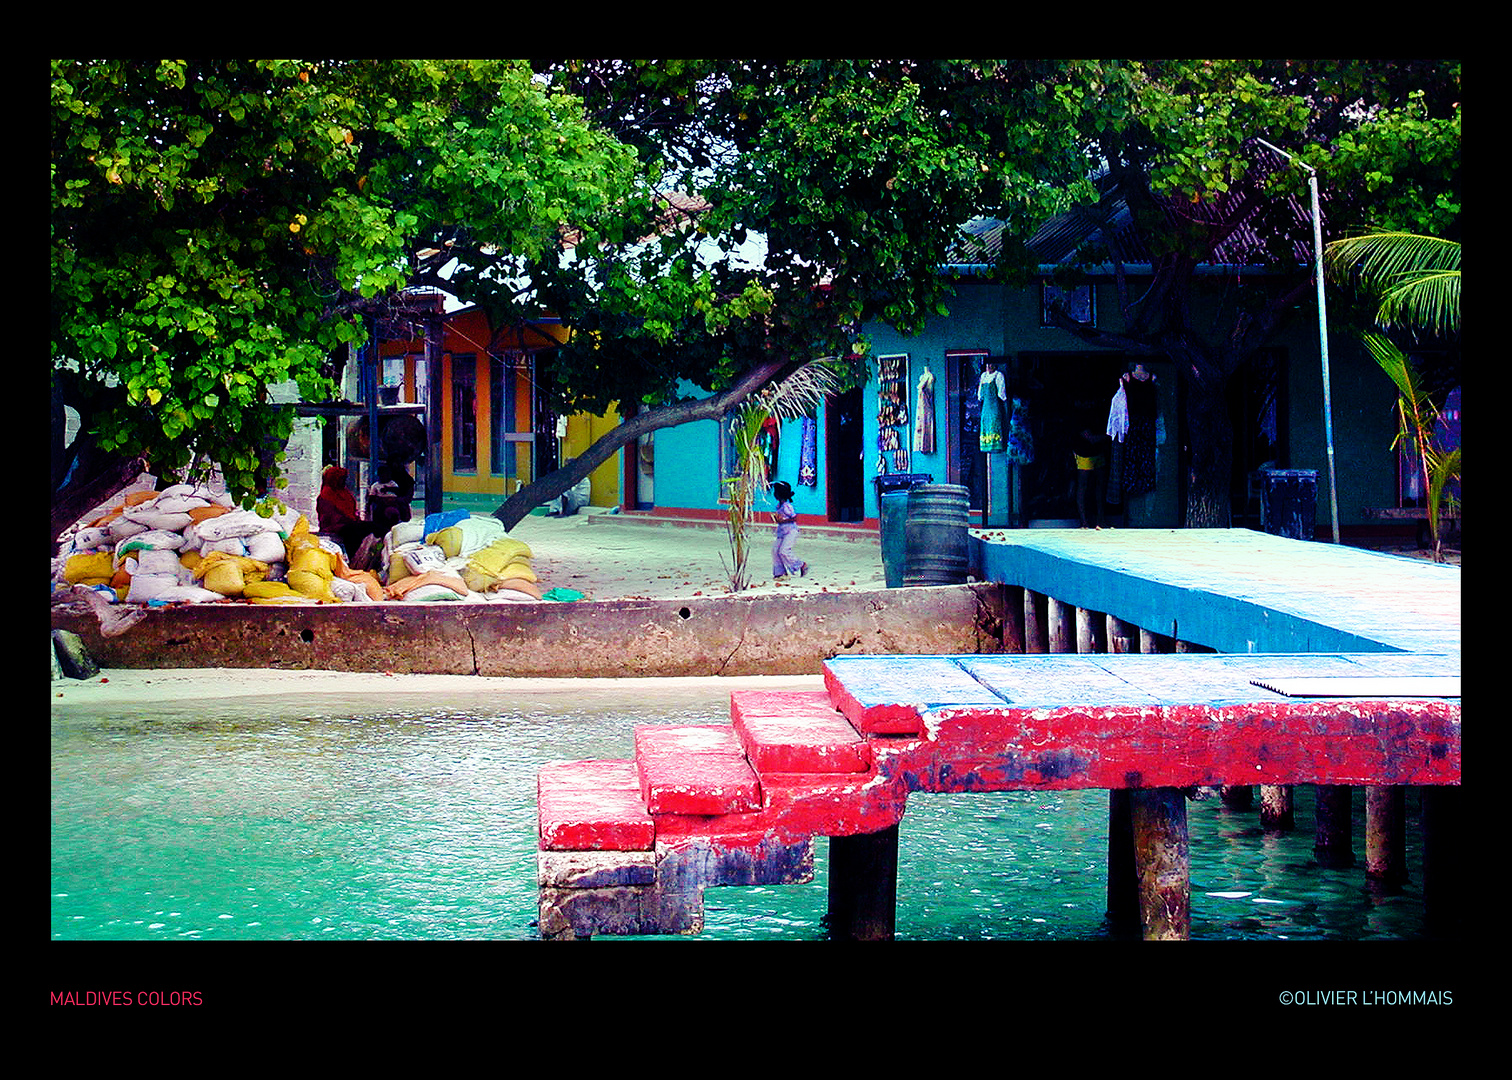 Maldives Colors